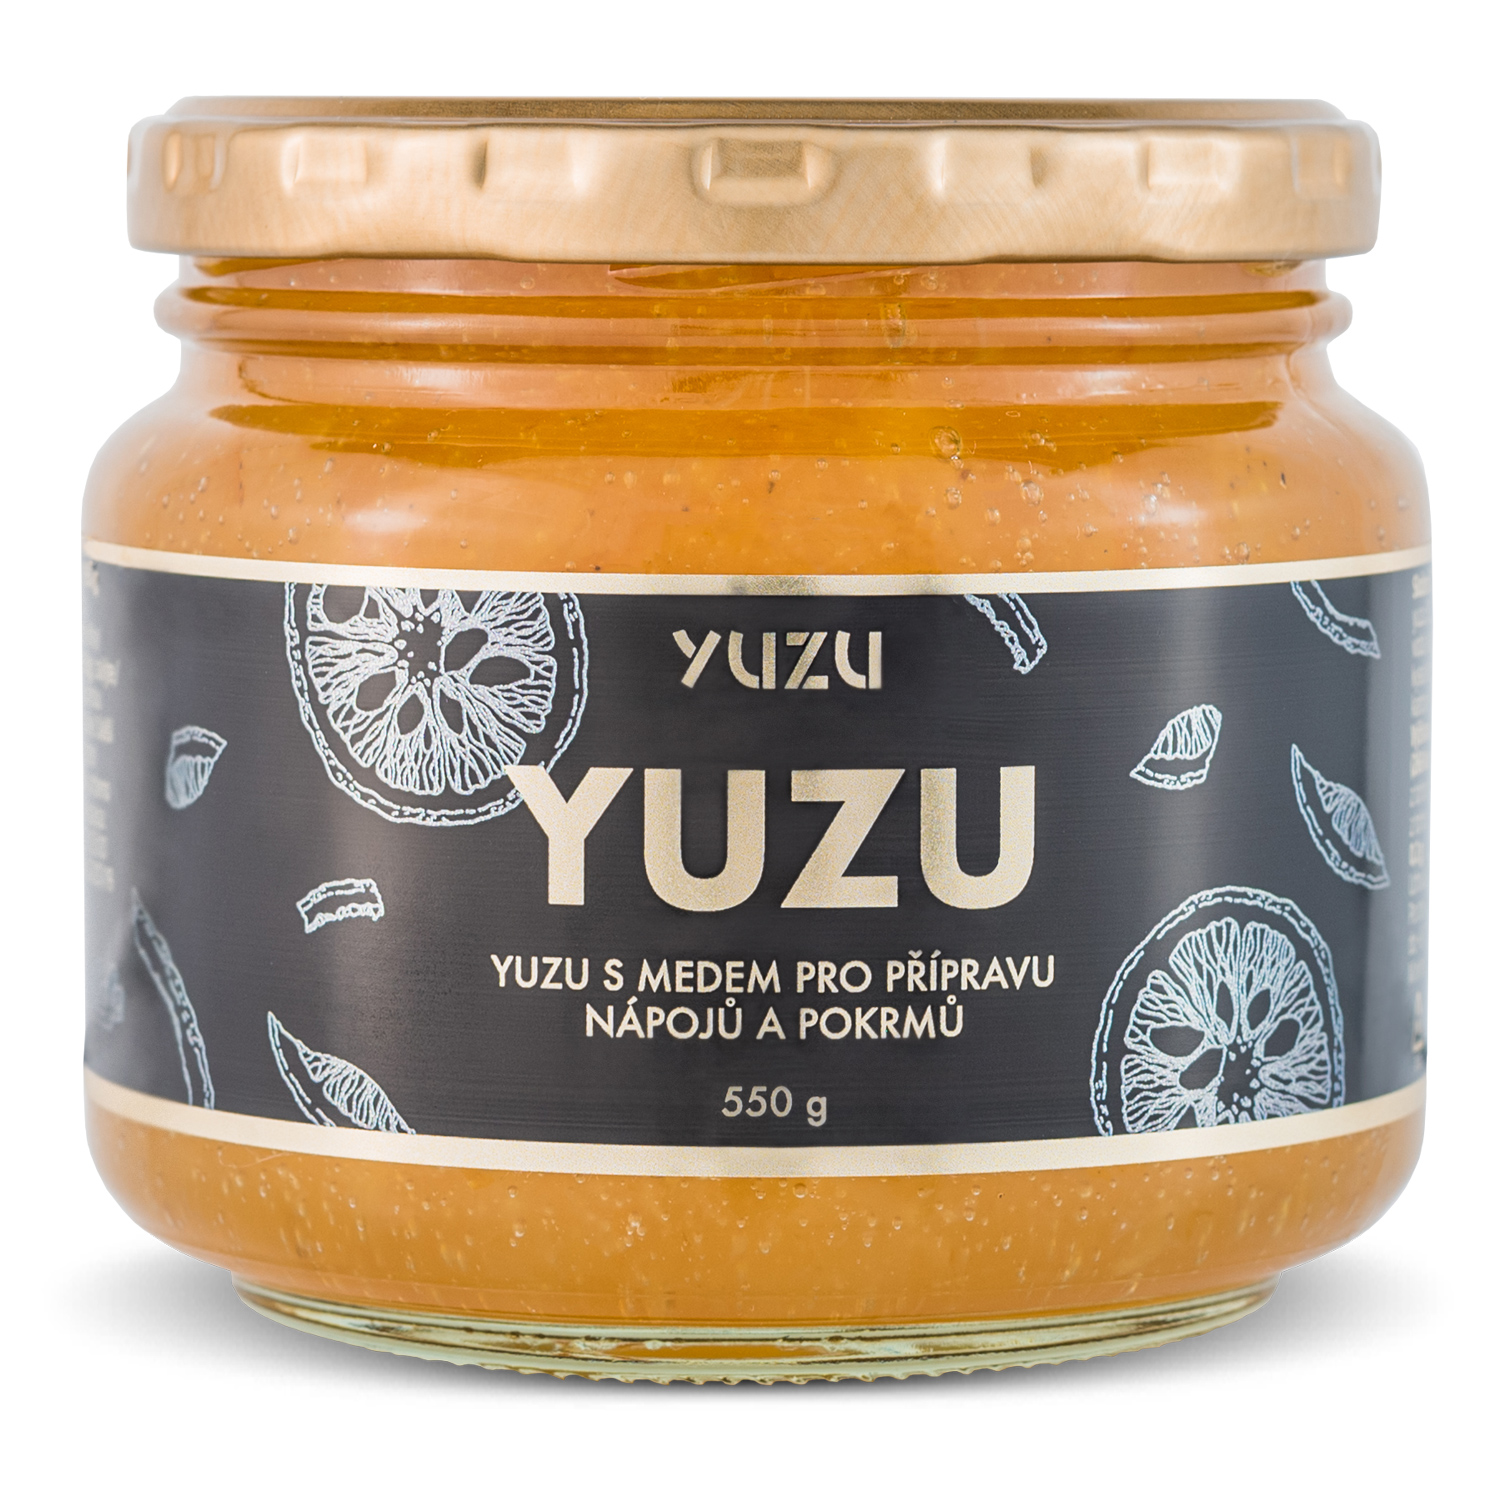 Yuzu Yuzu nápojový koncentrát s kousky yuzu, s vitaminem C 550 g